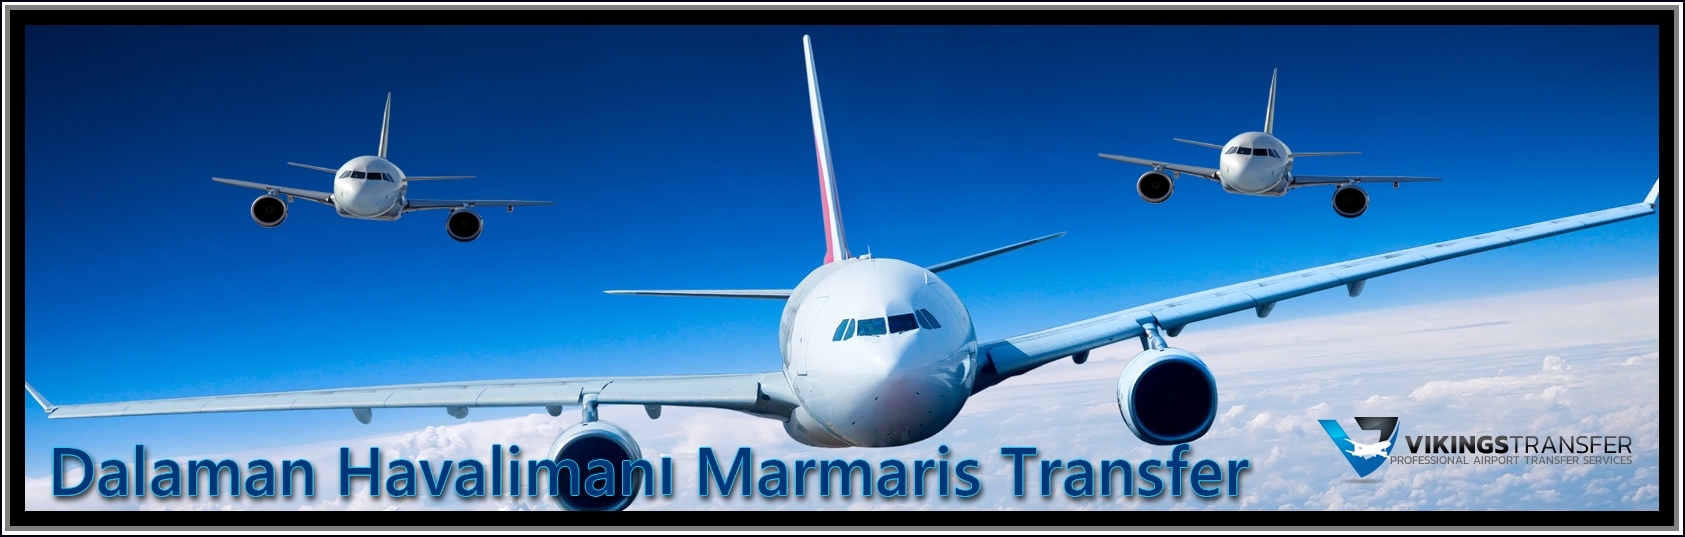 Dalaman Havalimanı Marmaris Transfer